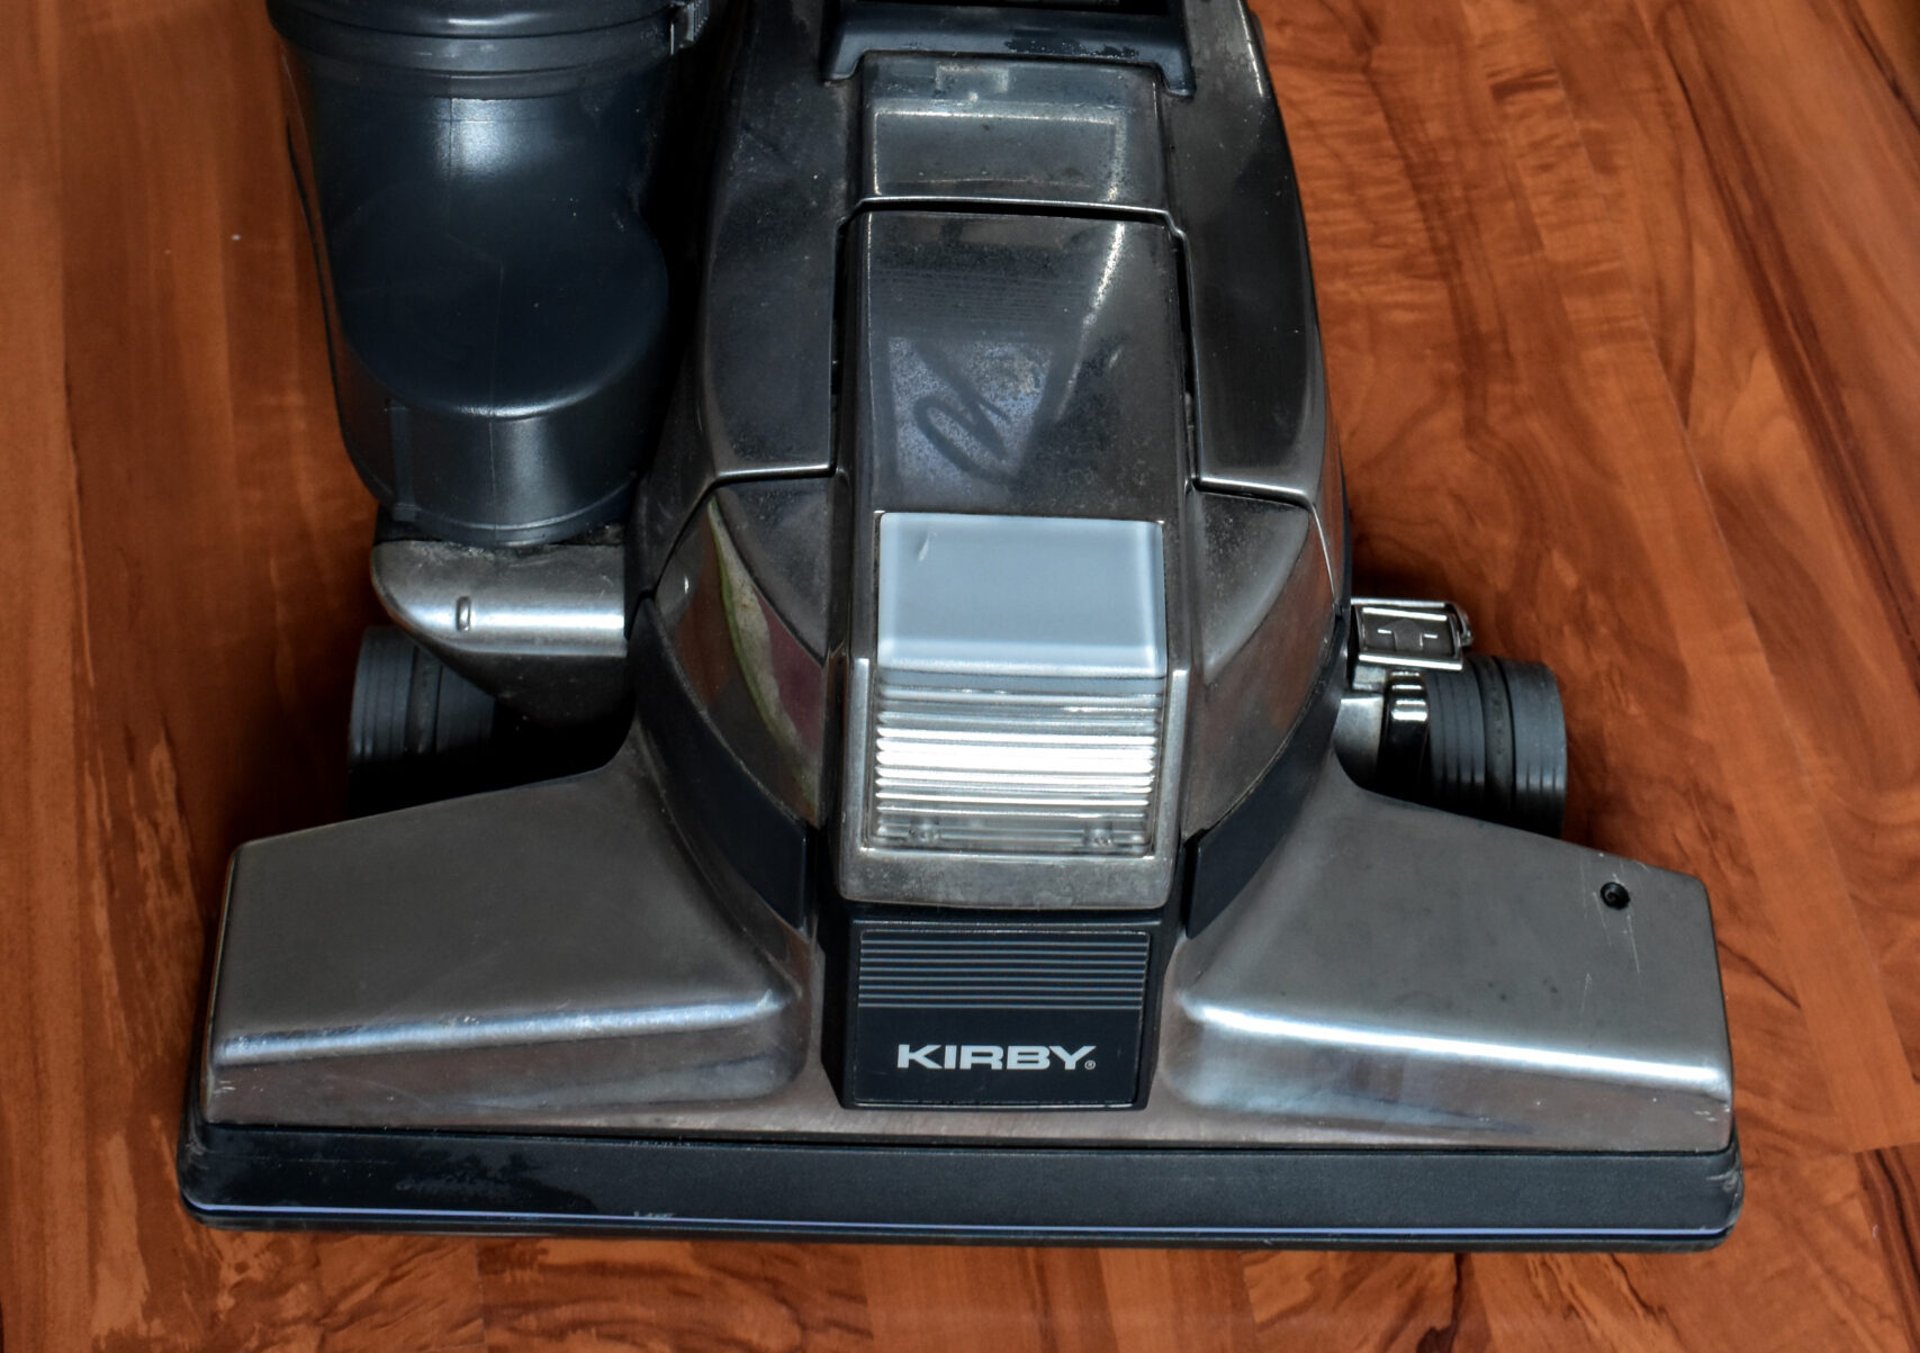 Kirby vacuum